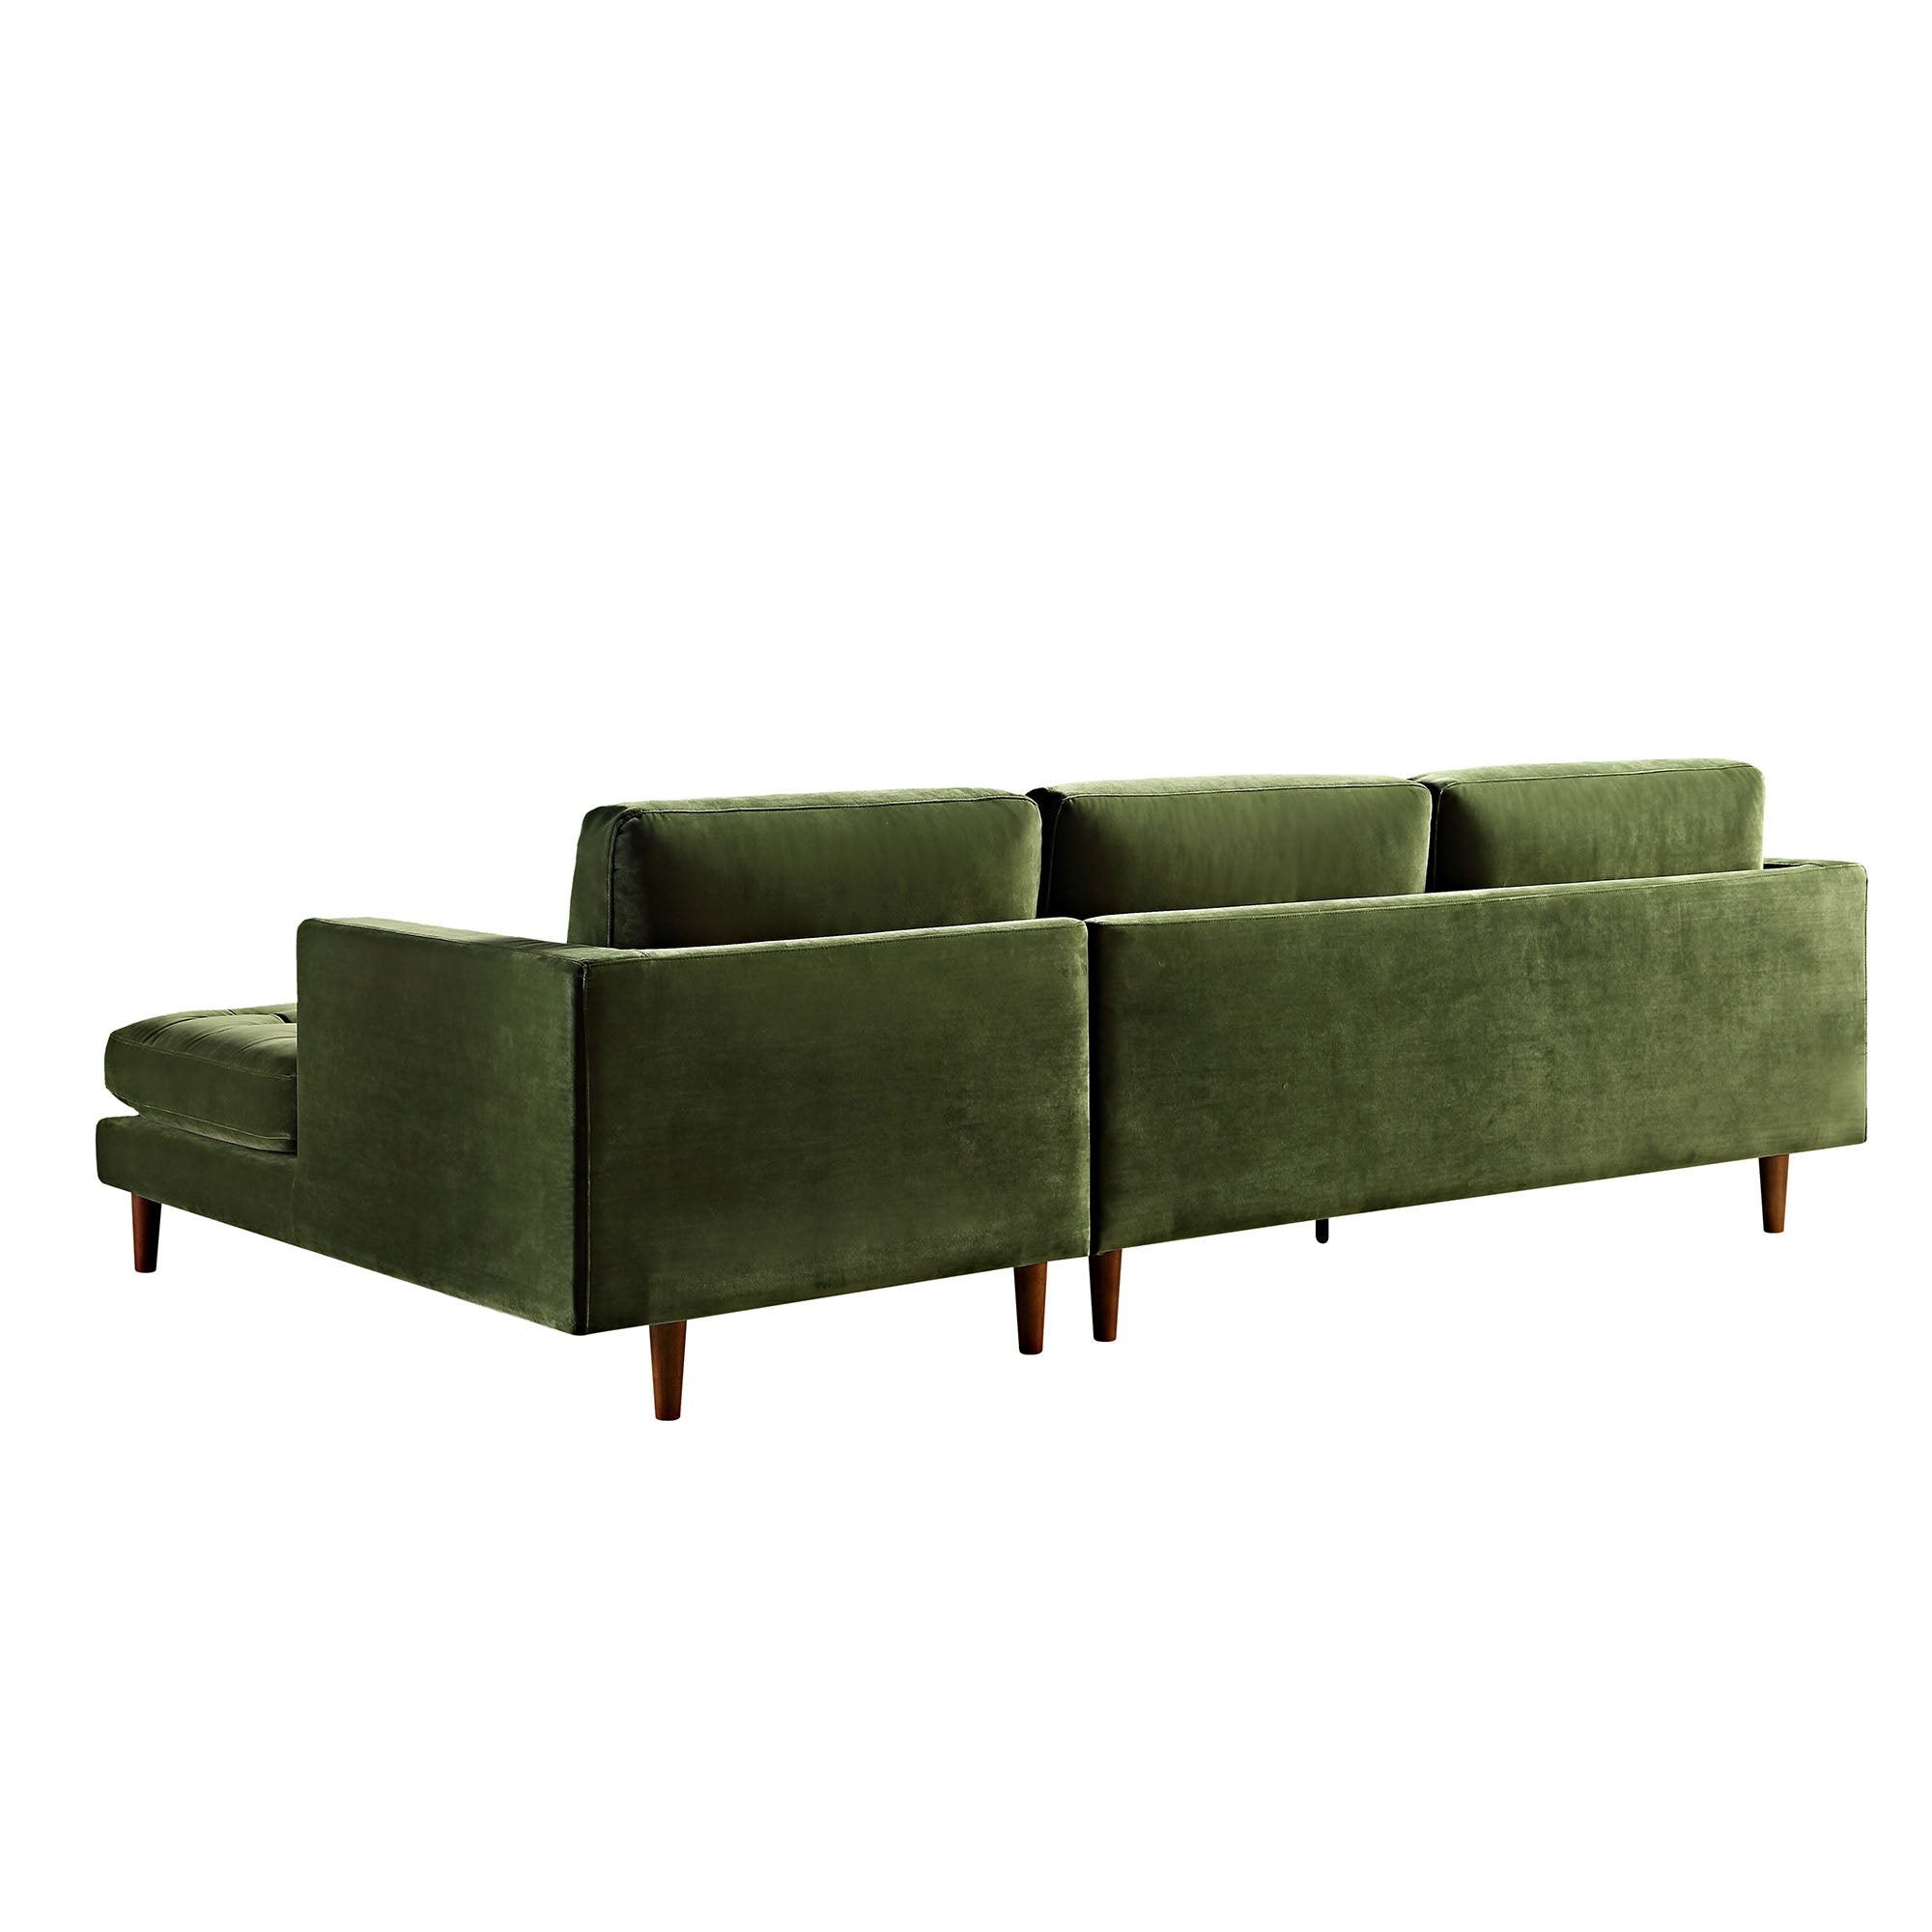 Henrietta Grand 4-Seater RHF Chaise End Sofa, Moss Green Velvet